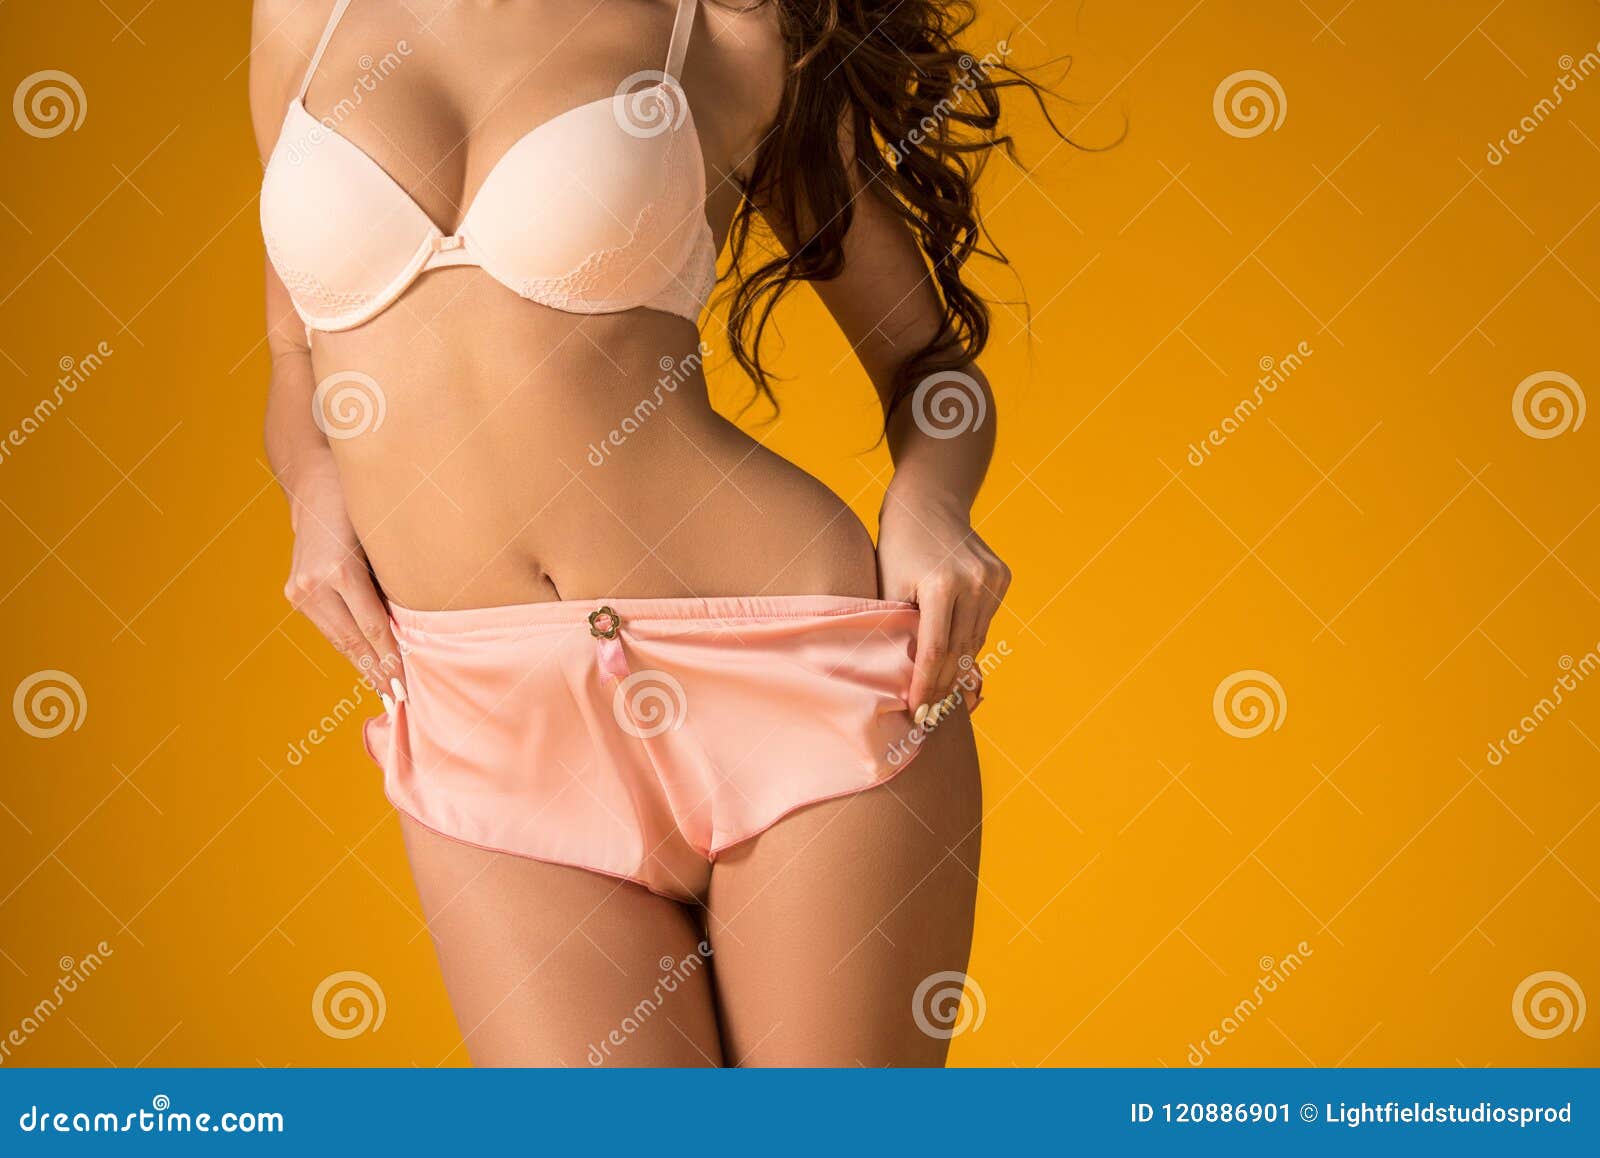 Cropped Image of Girl Taking Off Panties Stock Image - Image of